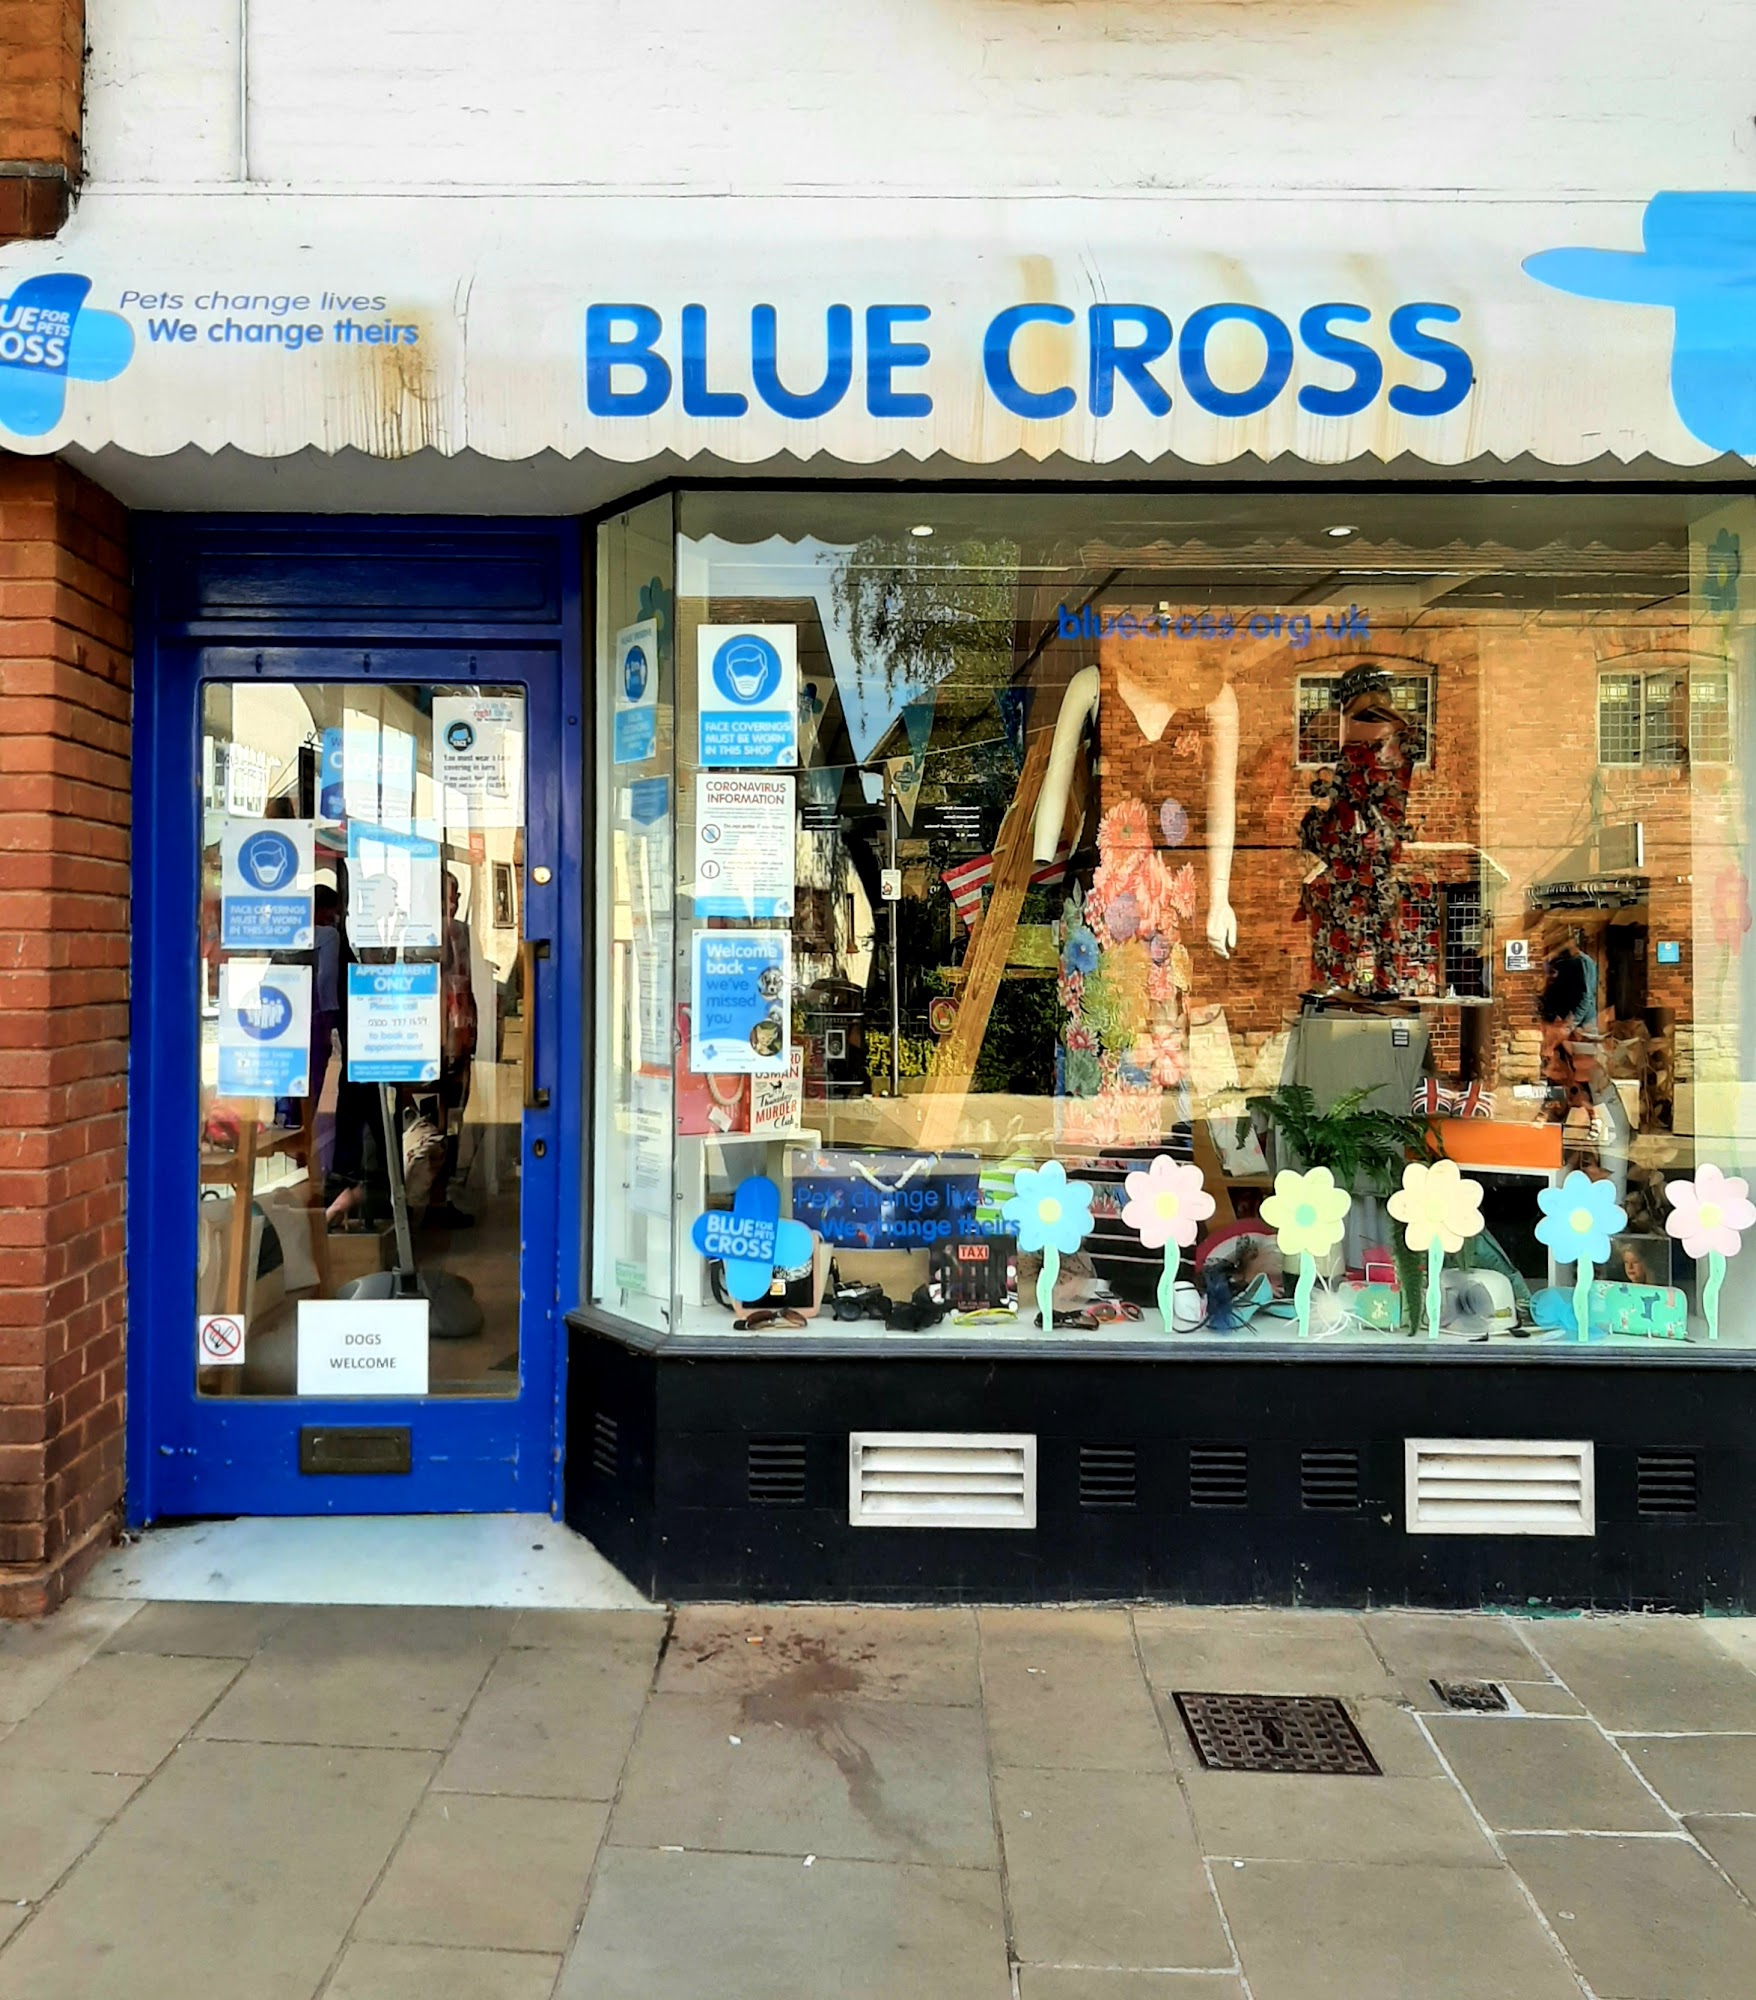 Blue Cross charity shop, Straford-upon-Avon